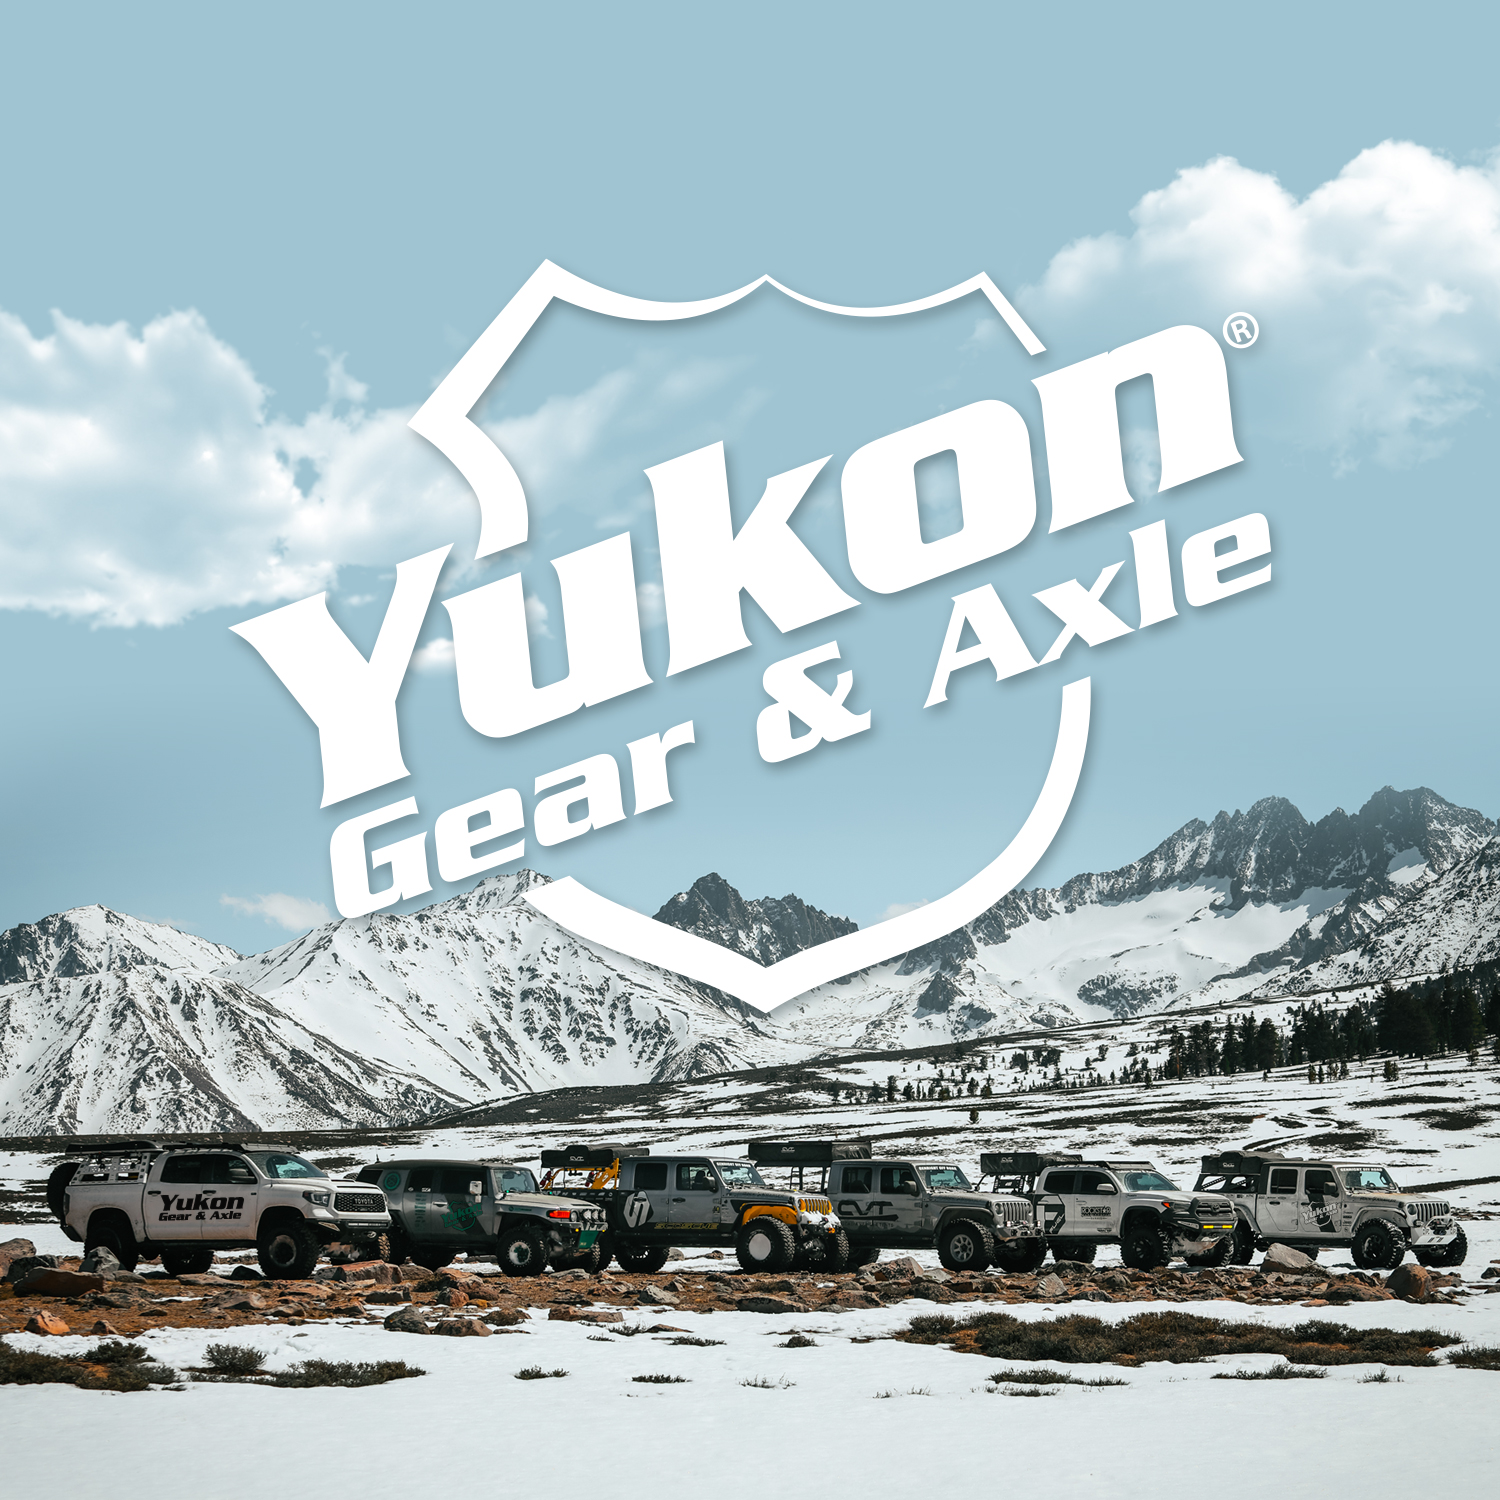 Yukon ring & pinion set for '08 & up Nissan M226 rear, 3.54 ratio. 